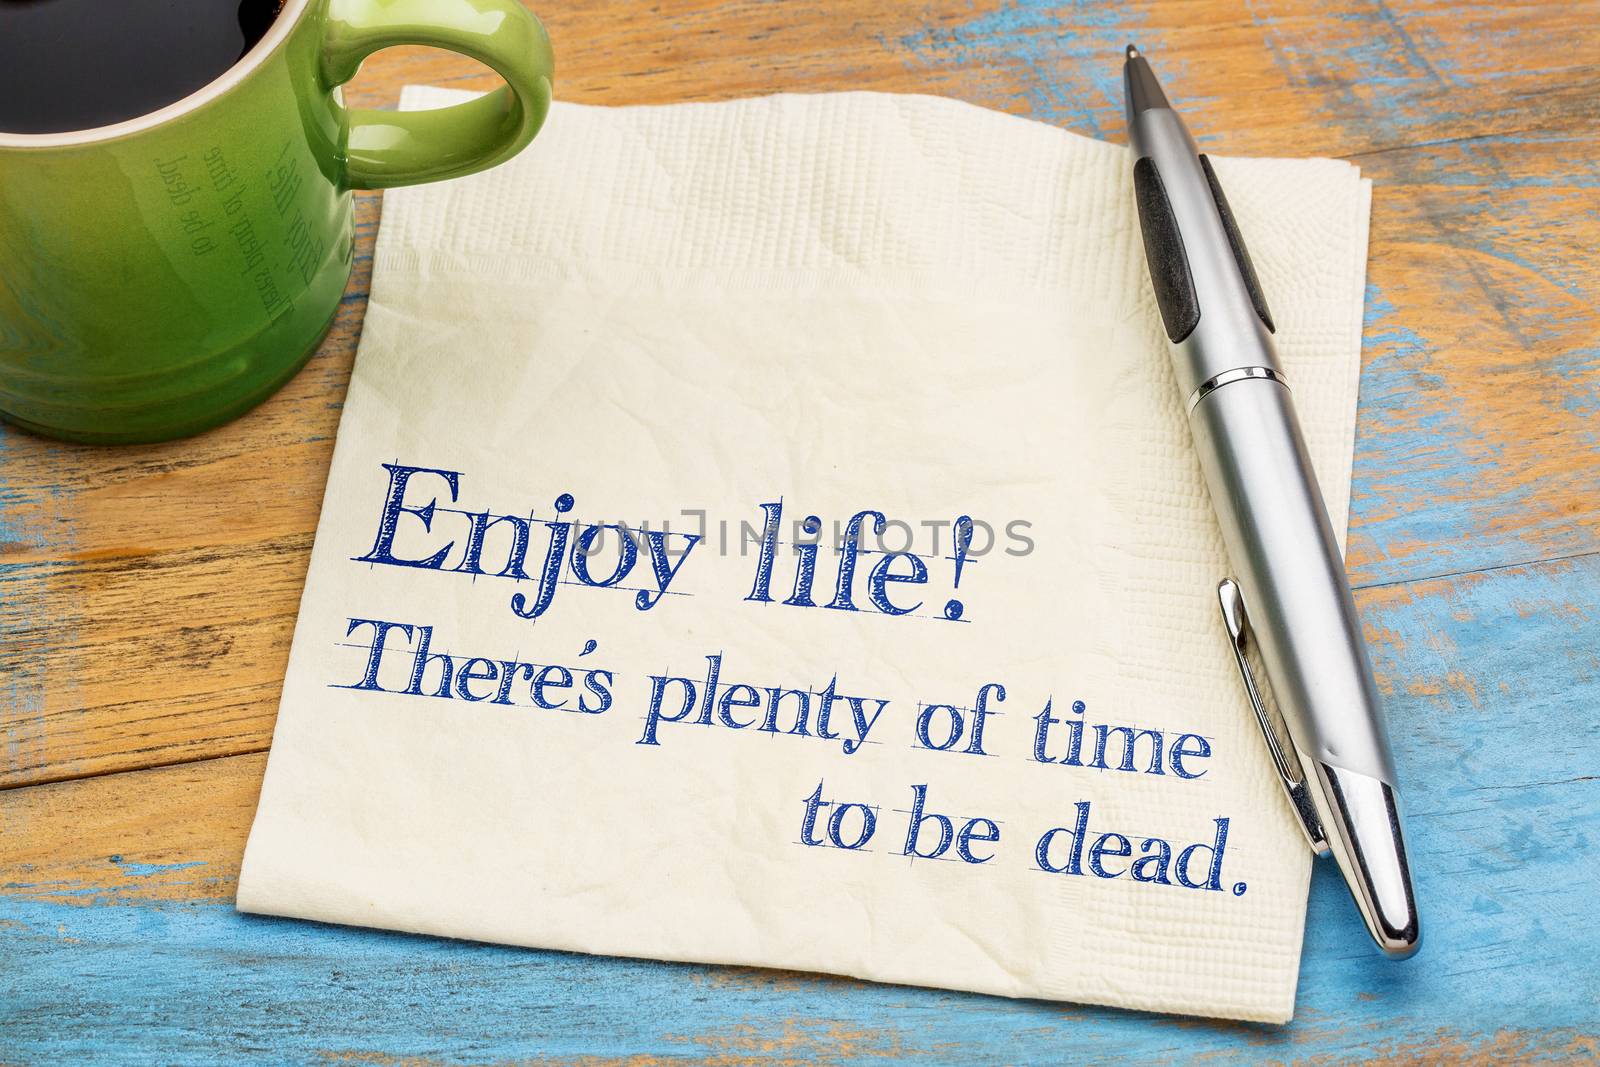 Enjoy life - napkin note by PixelsAway